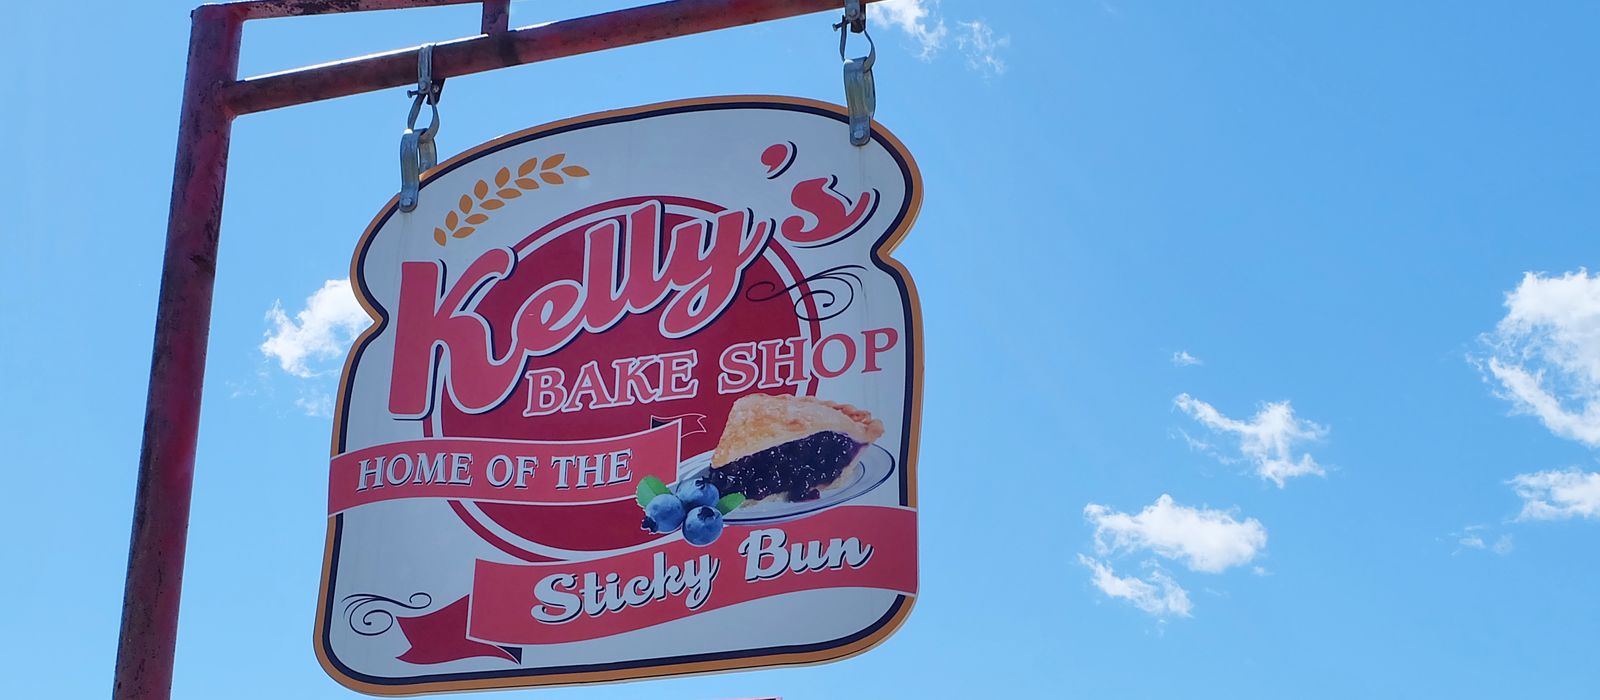 Kelly's Bake Shop - Home of the Sticky Bun